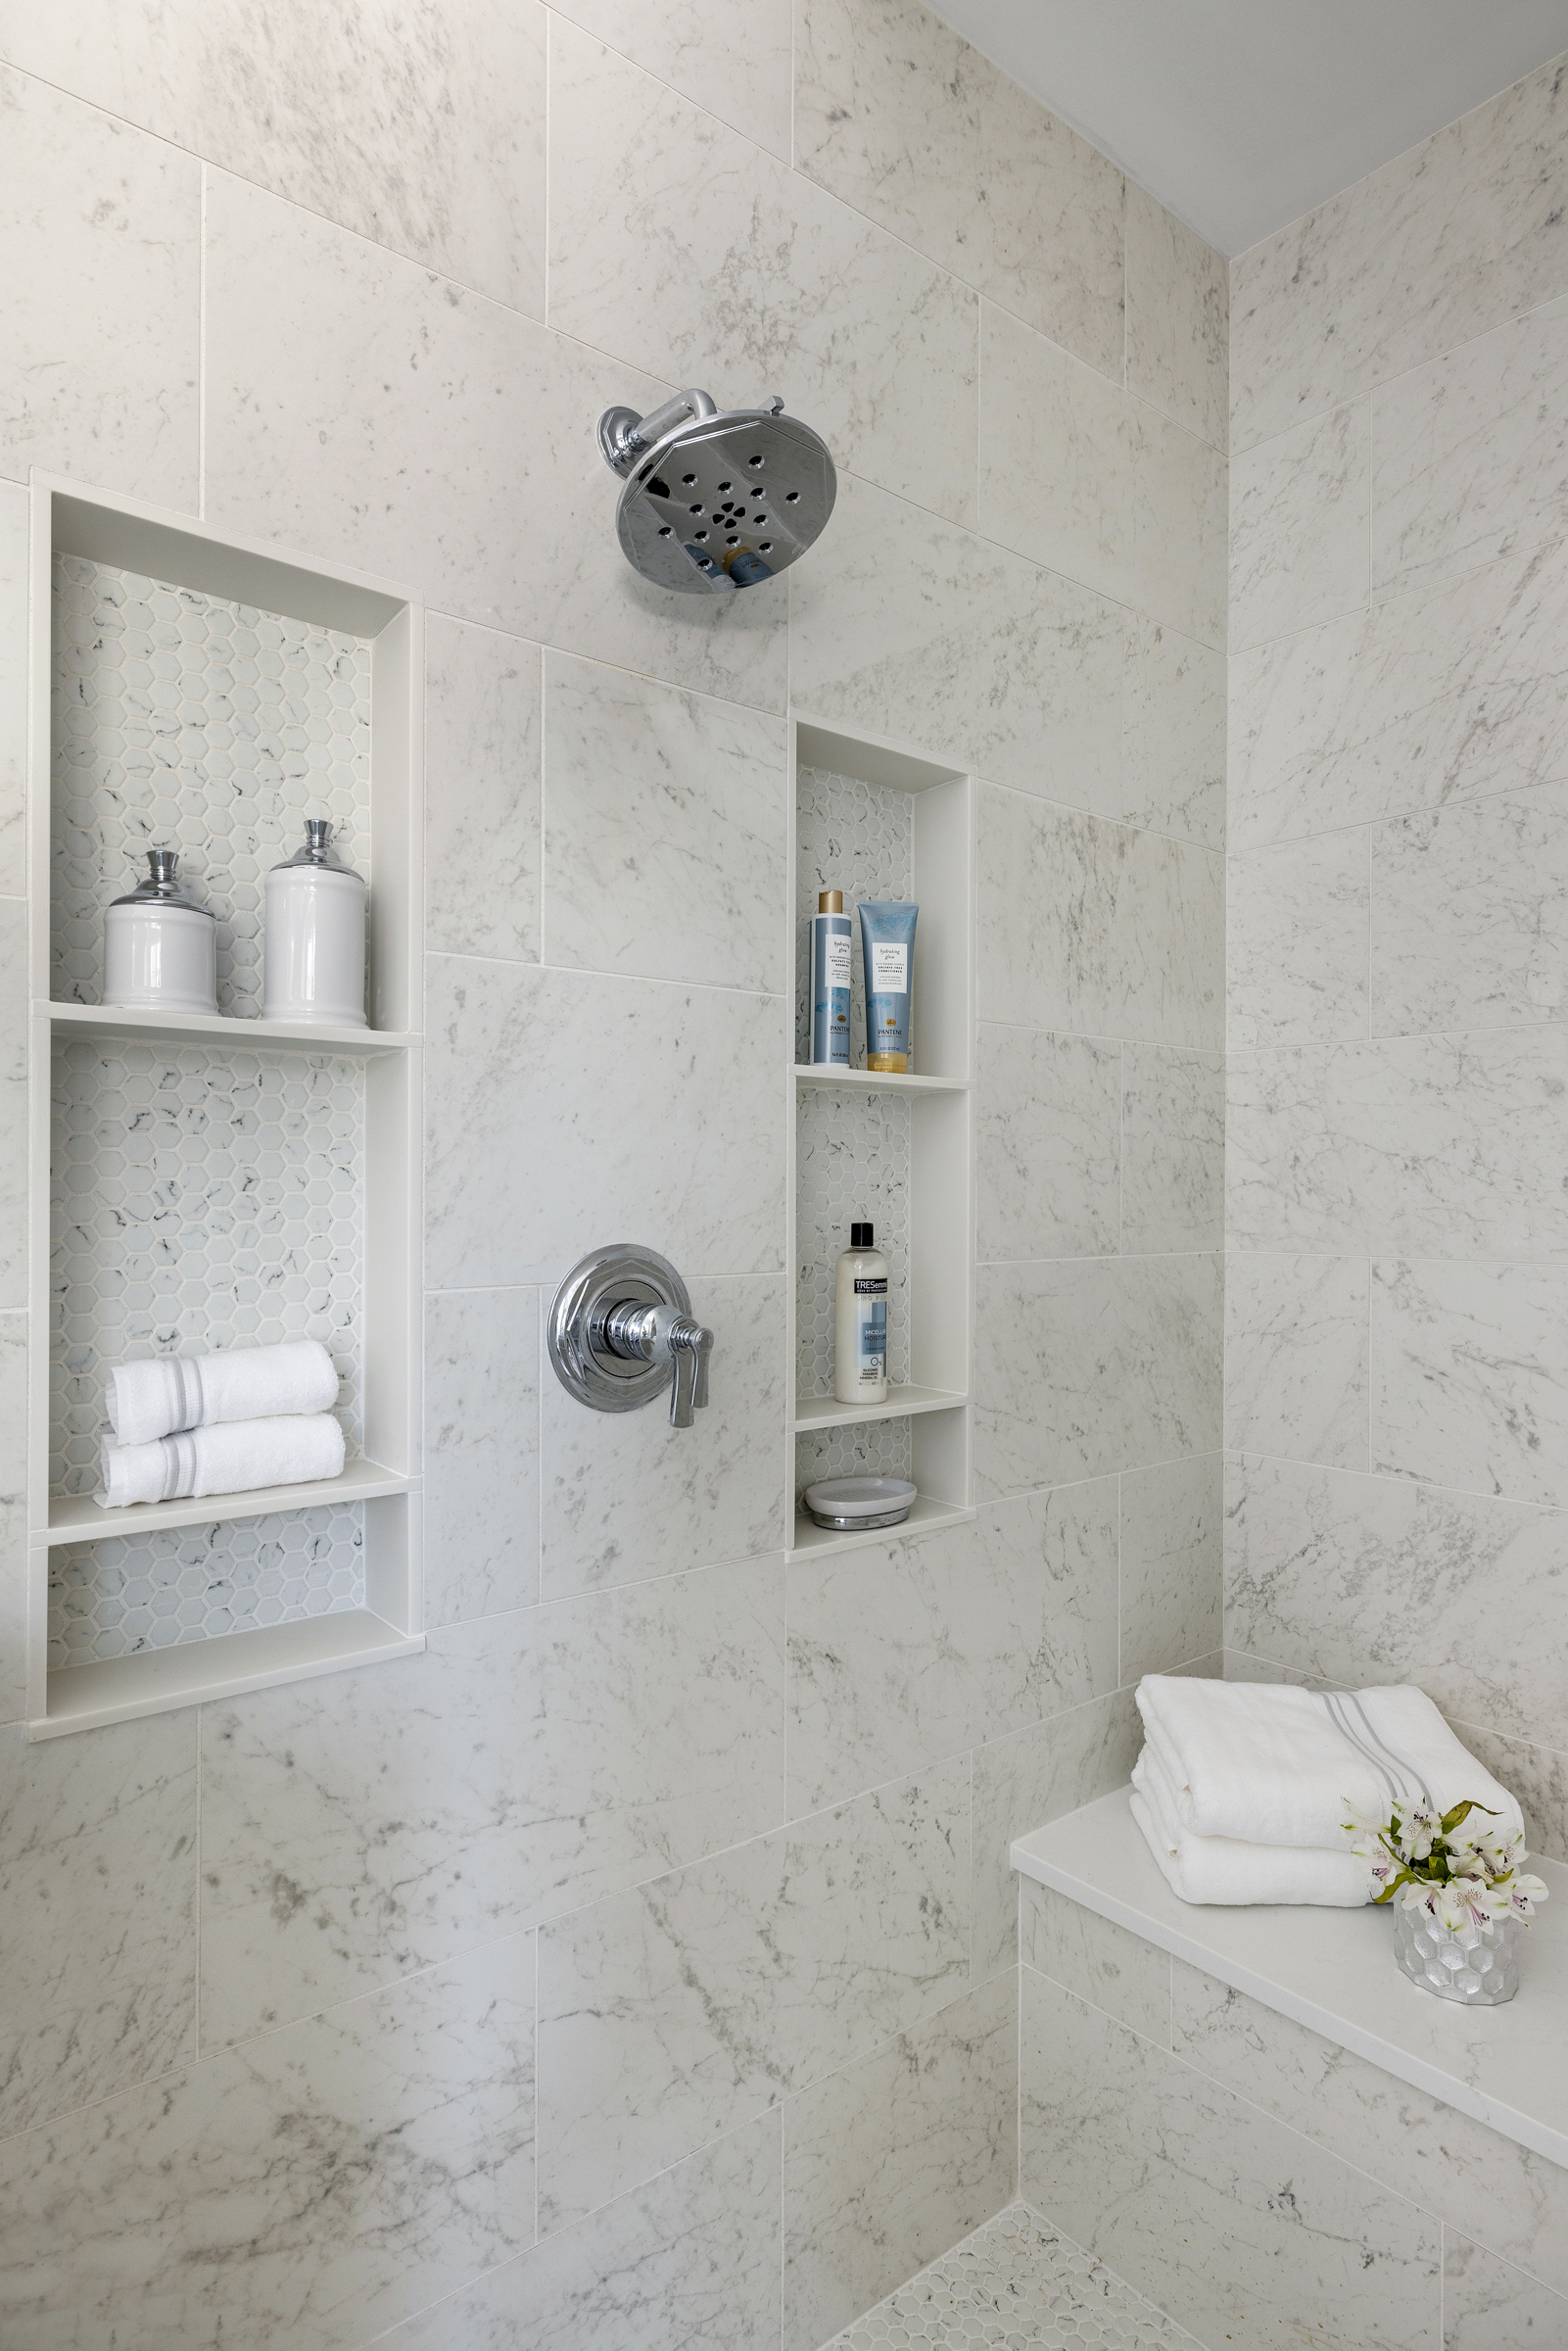 European inspired bathroom remodel with light blue vanity and white tile floor